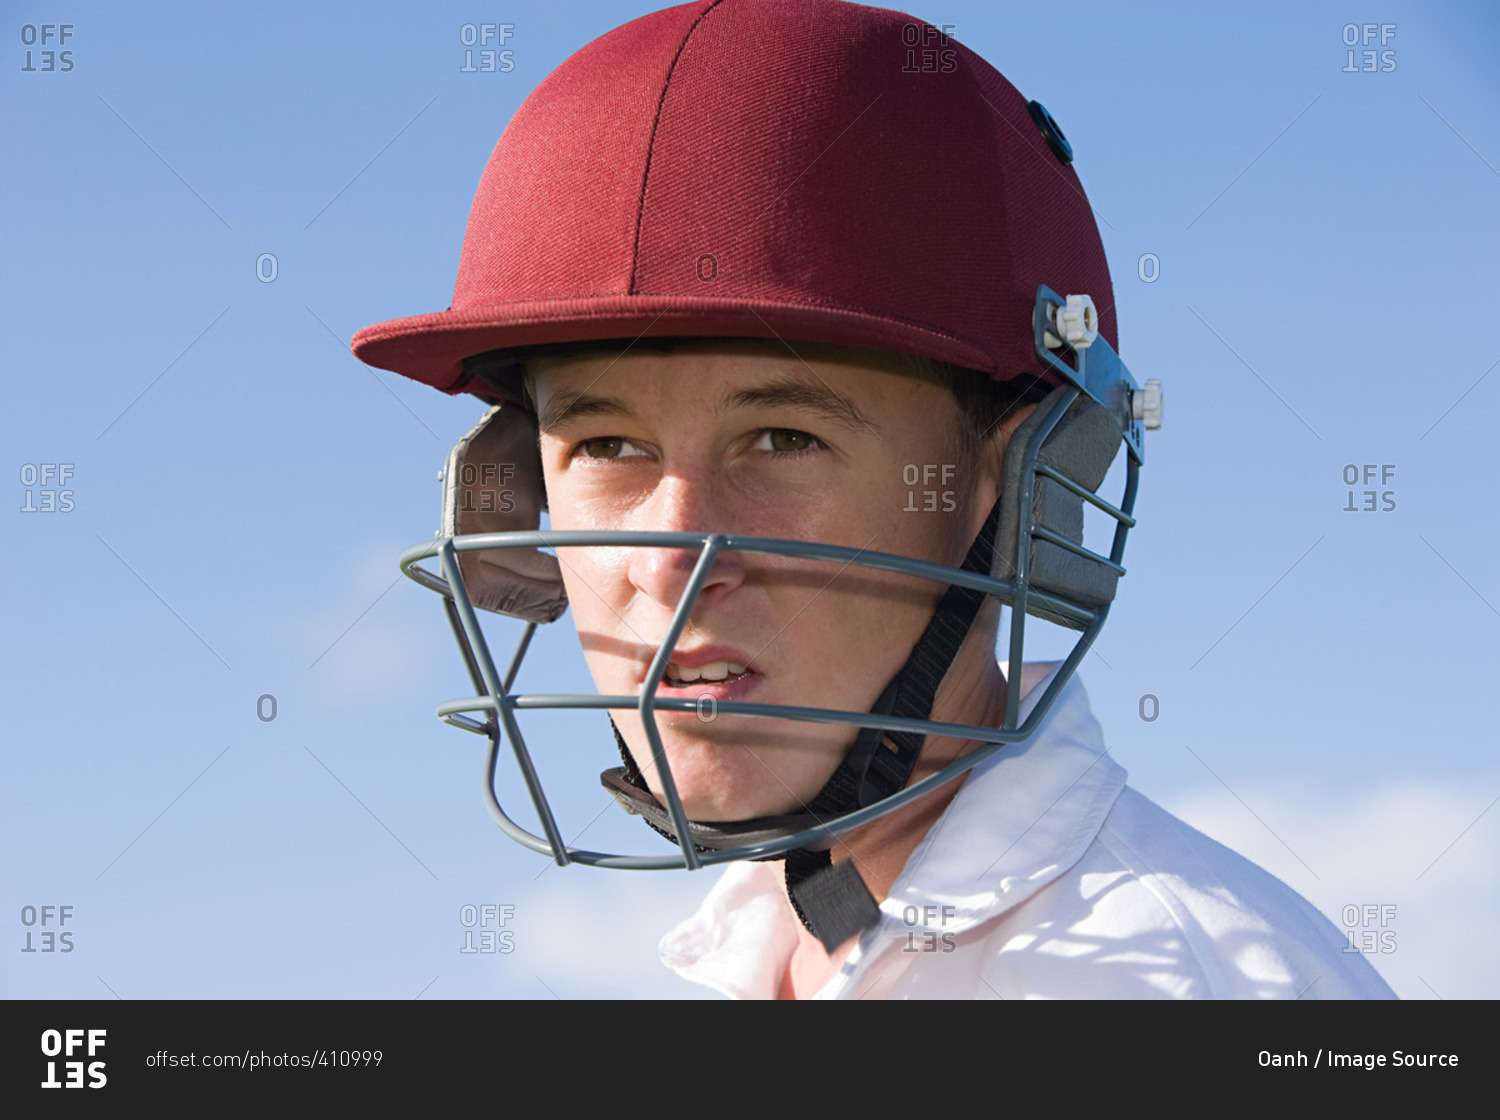 Auckland, cricket player